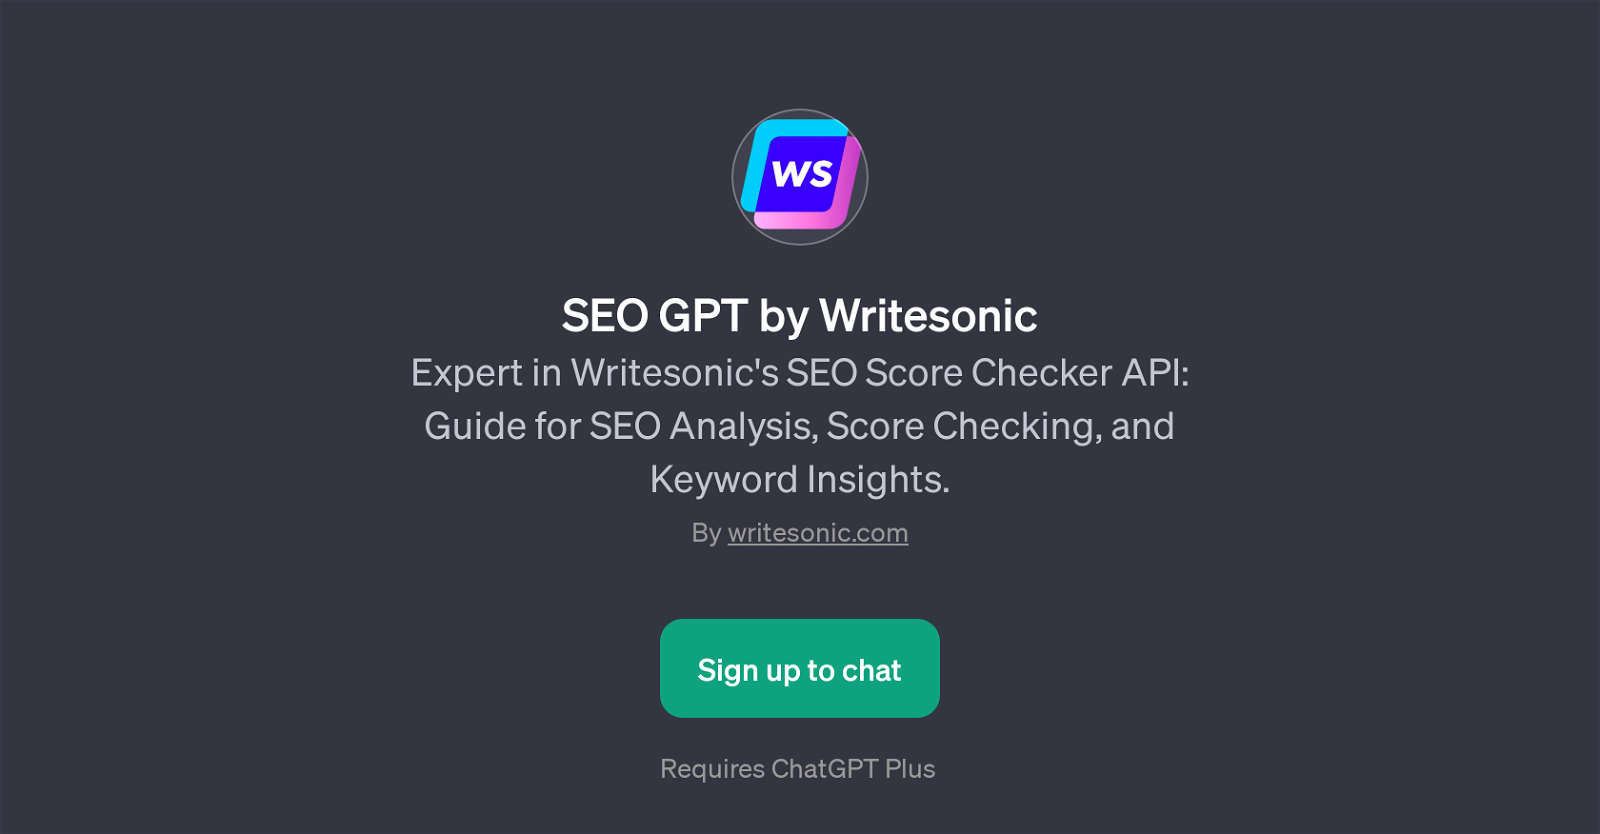 SEO GPT by Writesonic website